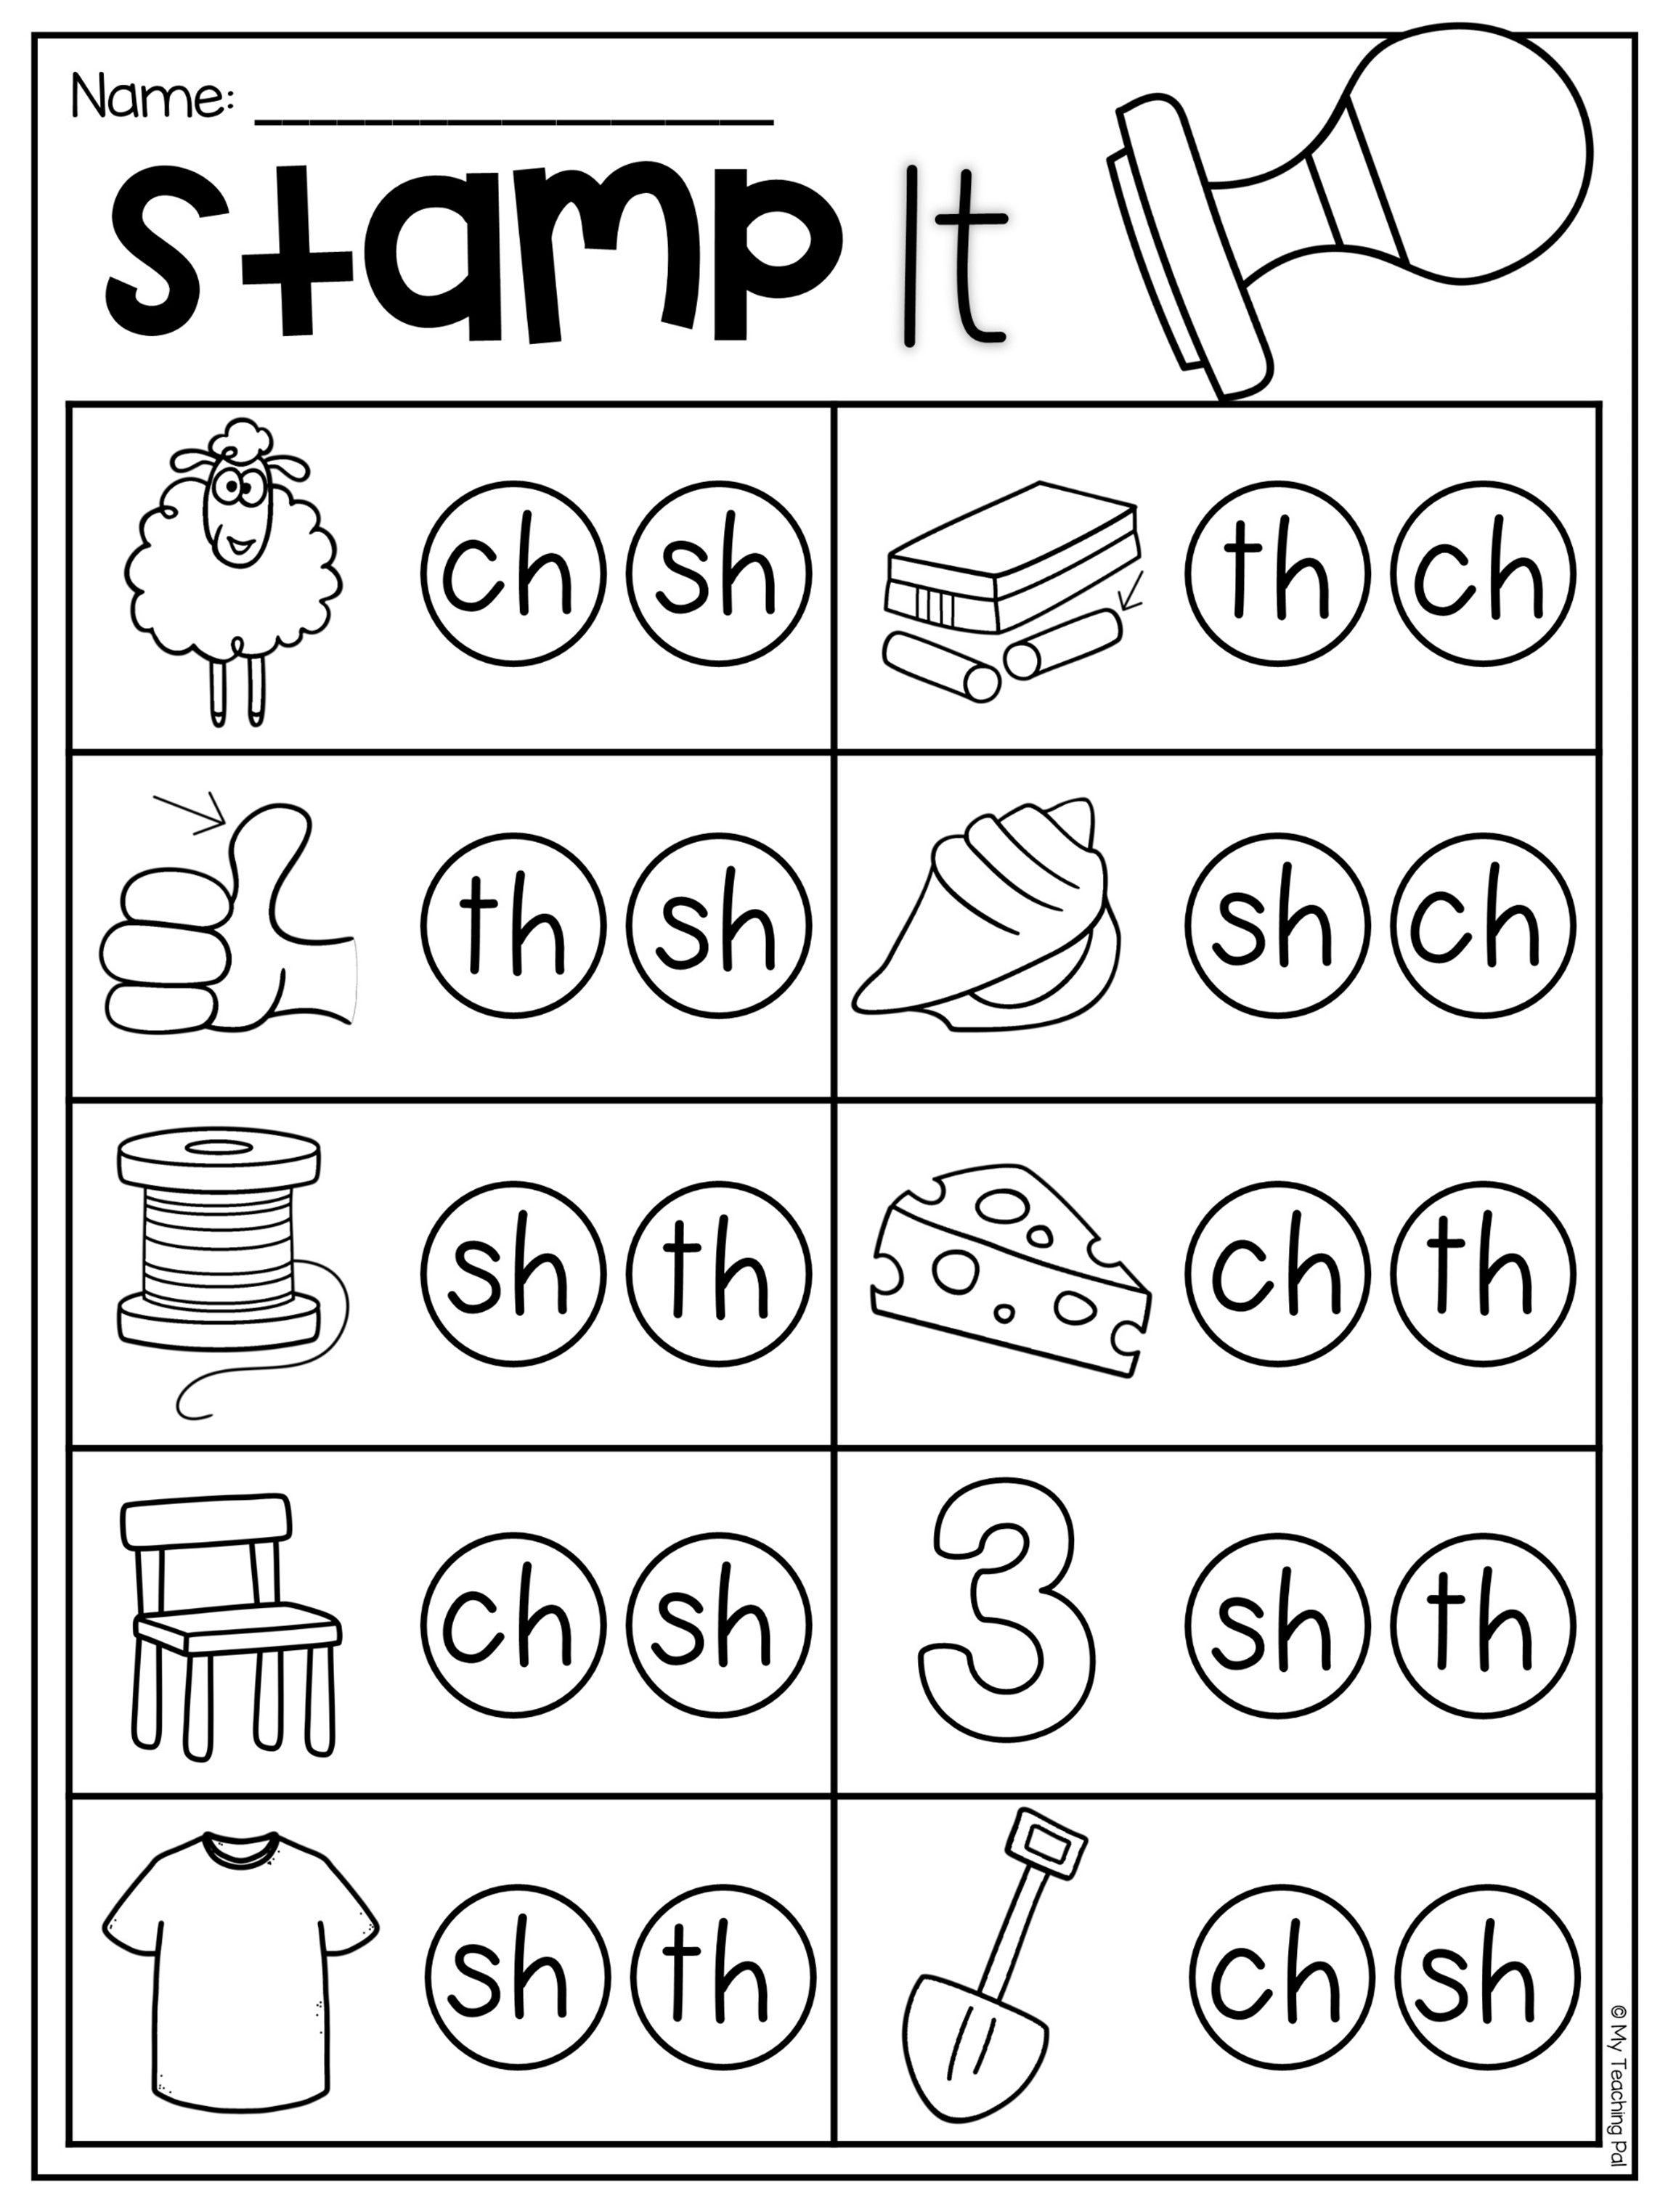 Digraph Worksheet Packet - Ch, Sh, Th, Wh, Ph | English | Digraphs | Sh Worksheets Free Printable